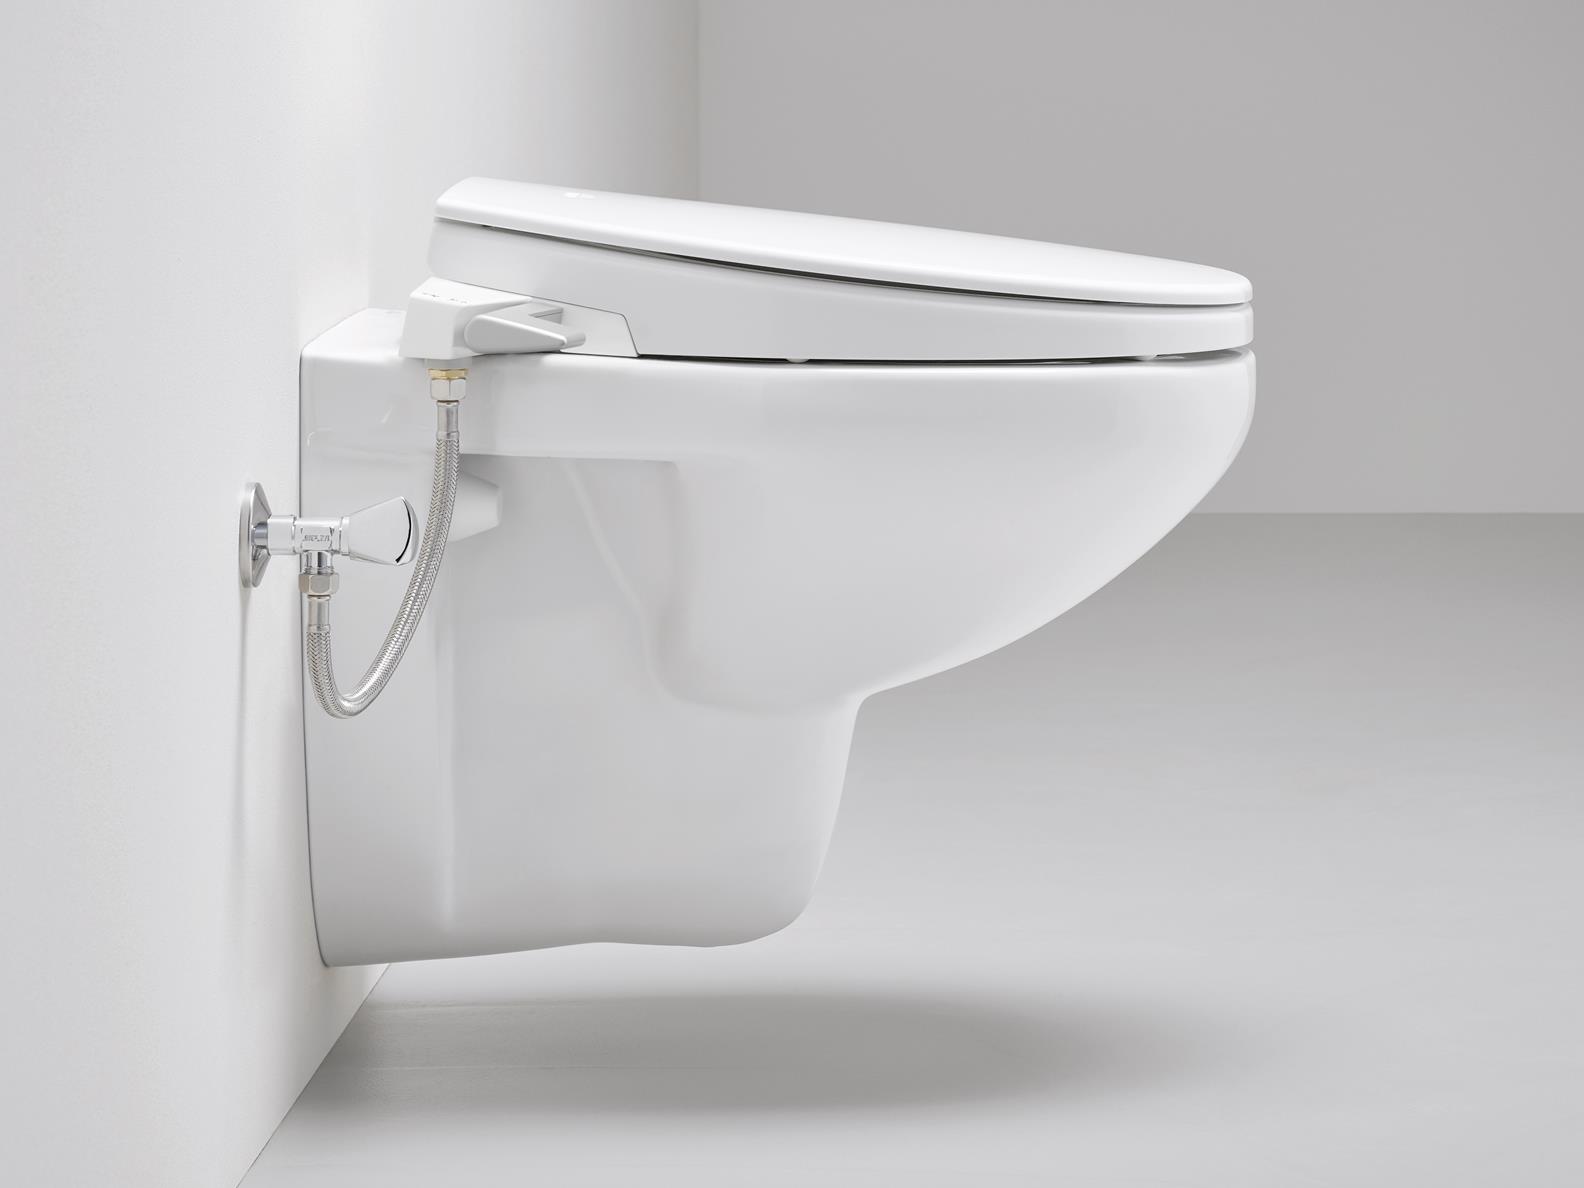 GROHE Manual Bidet Seat: An affordable bathroom upgrade